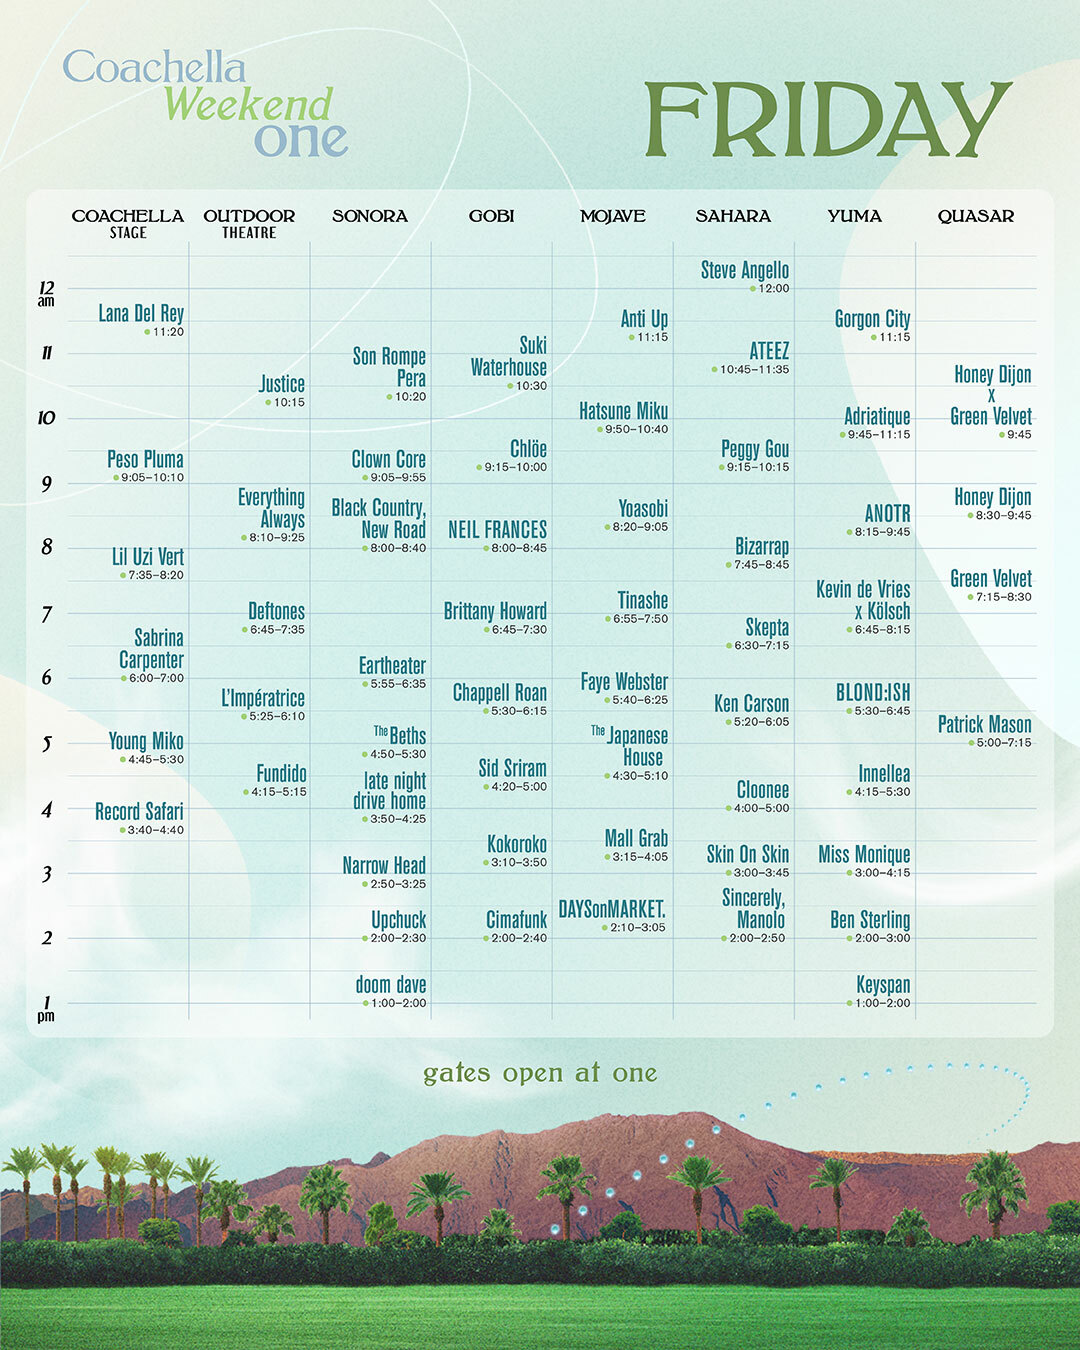 Coachella weekend one Friday schedule